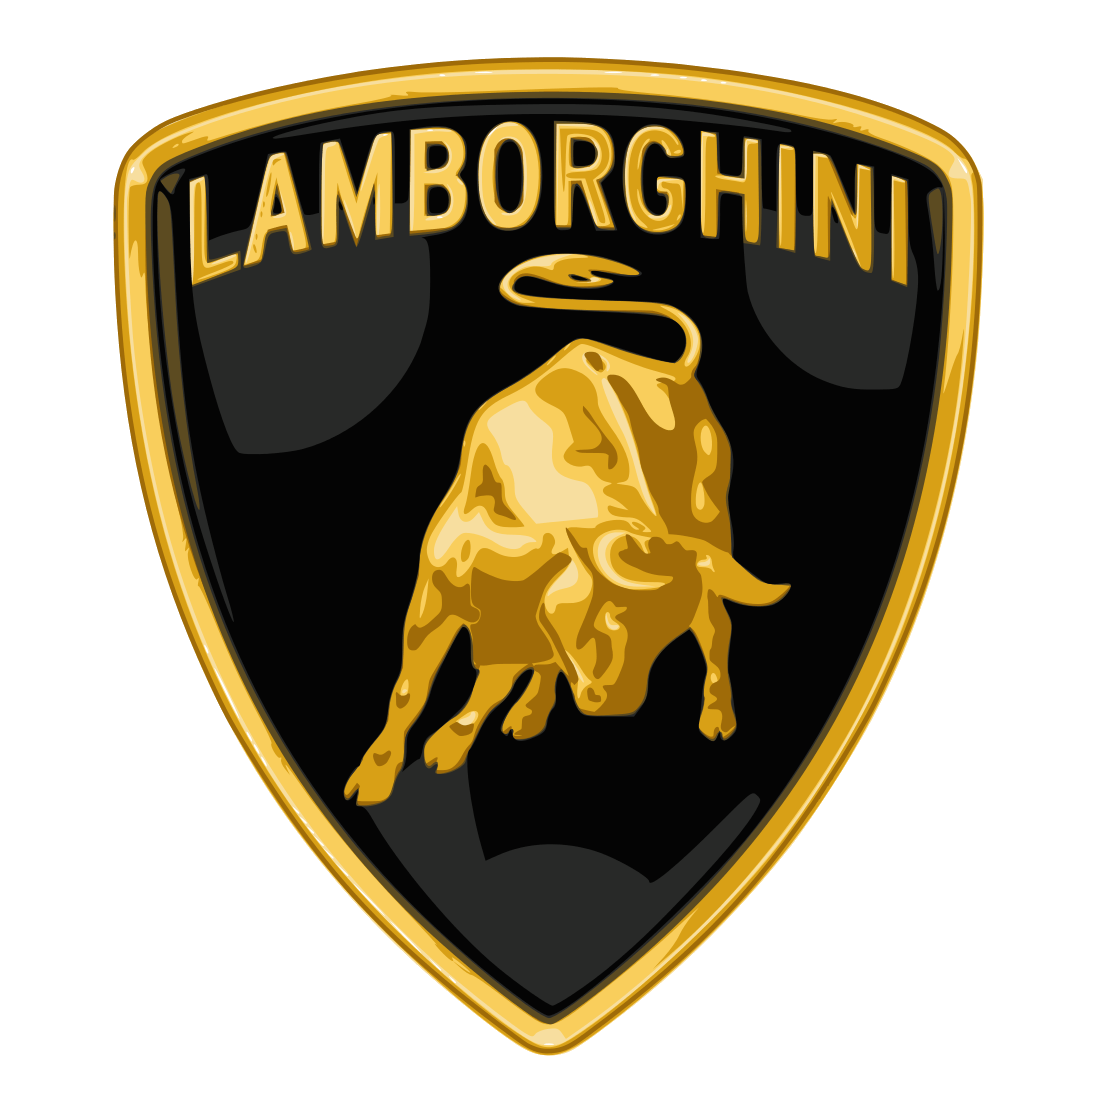 Lamborghini Logo With Backgrounds - Wallpaper Cave